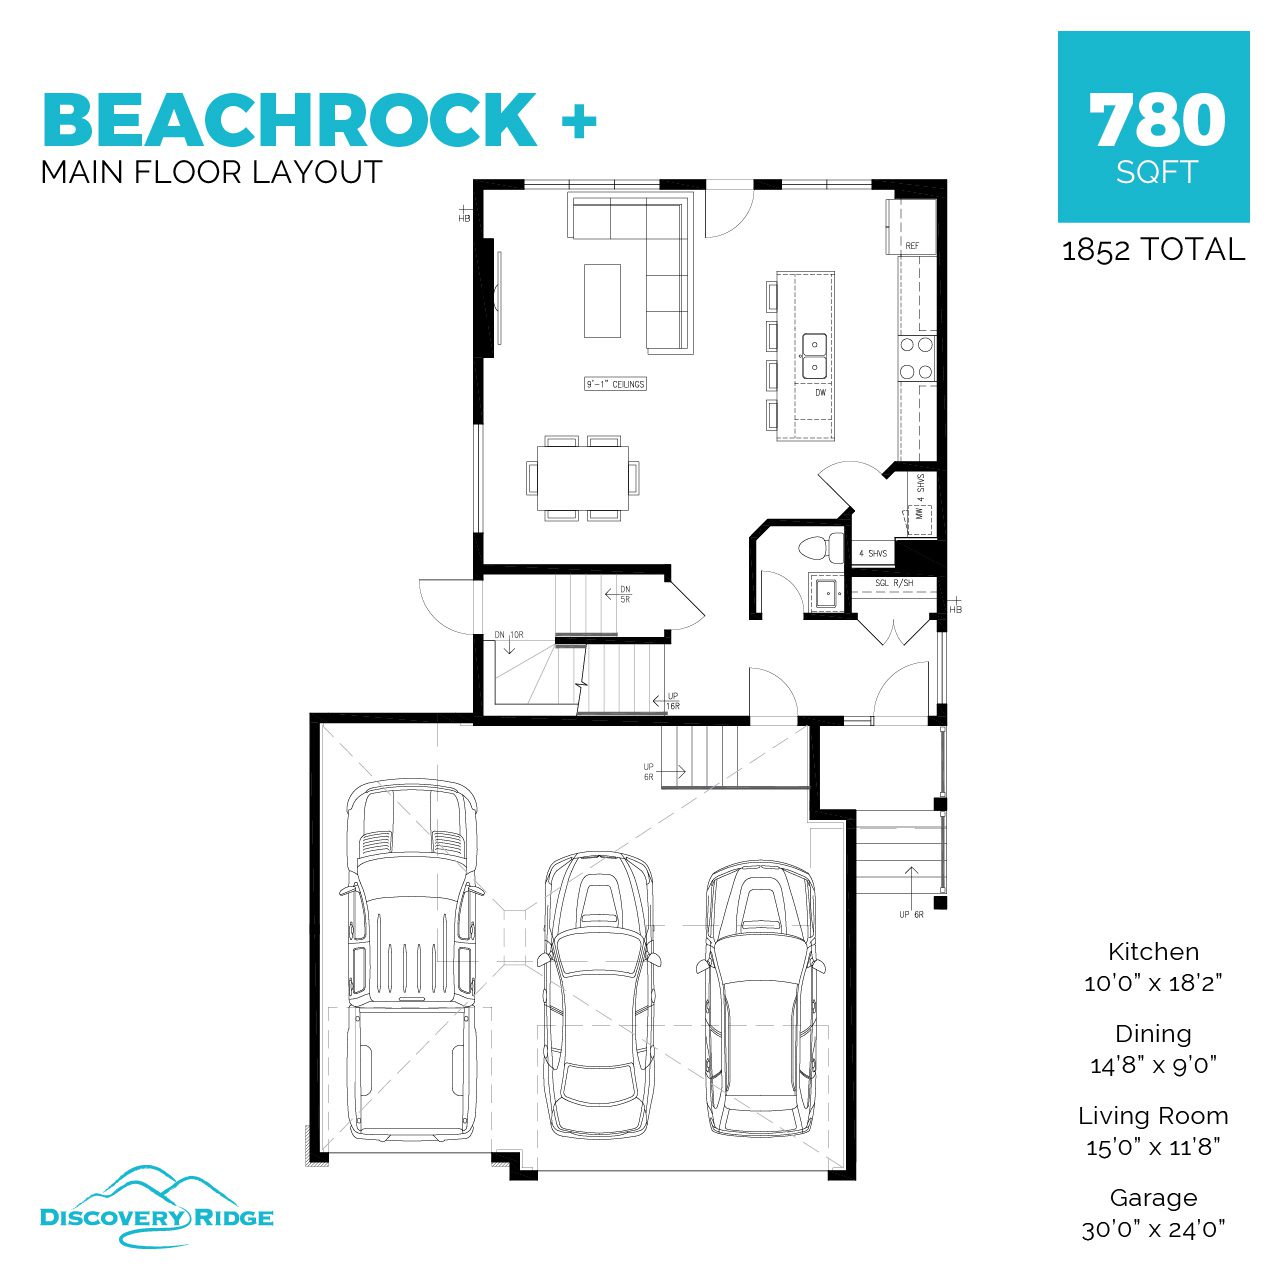 Two-storey beachrock floor plan located in Pilot Butte.